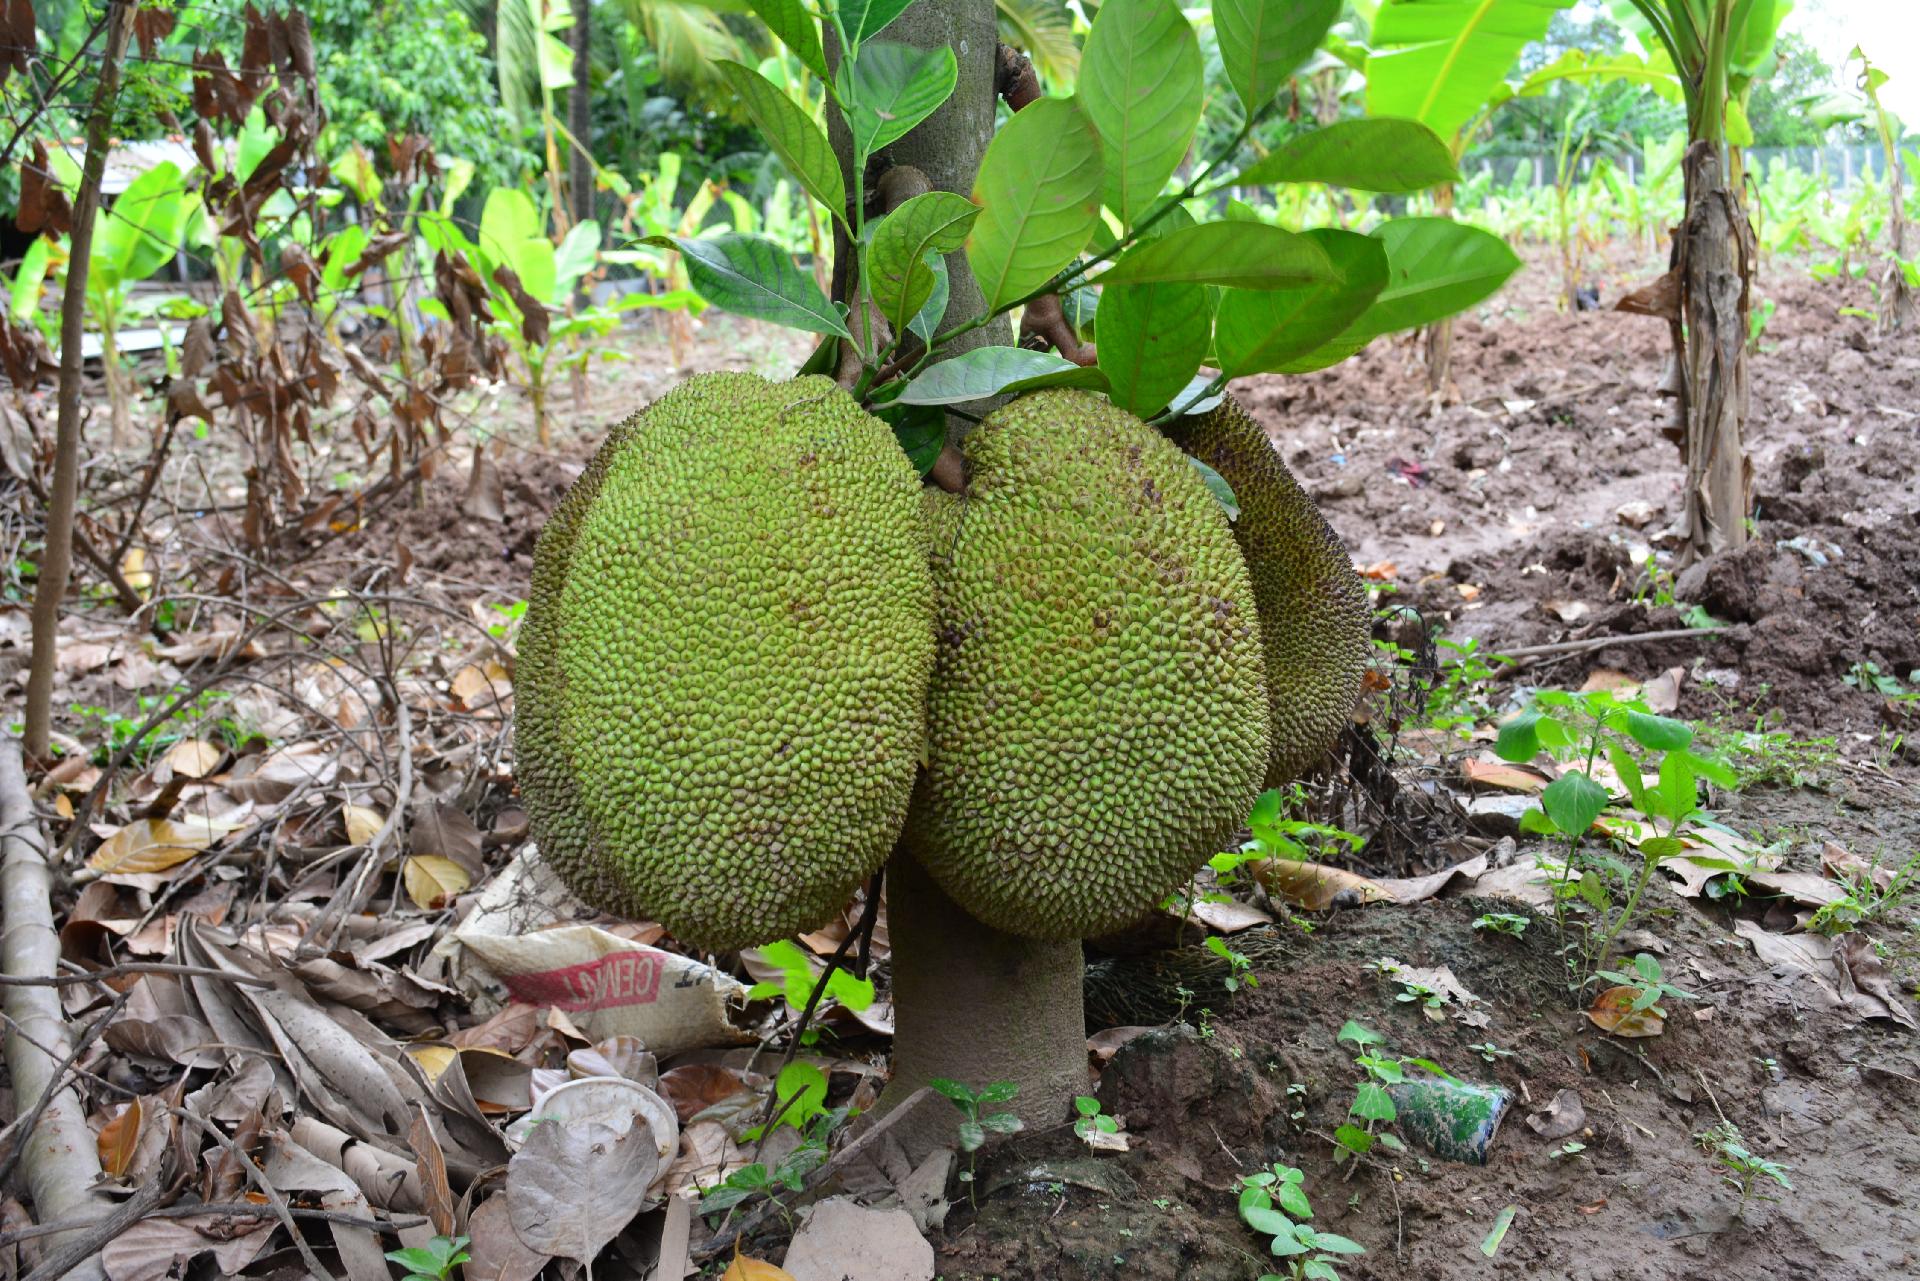 Jackfruit in Cambodia